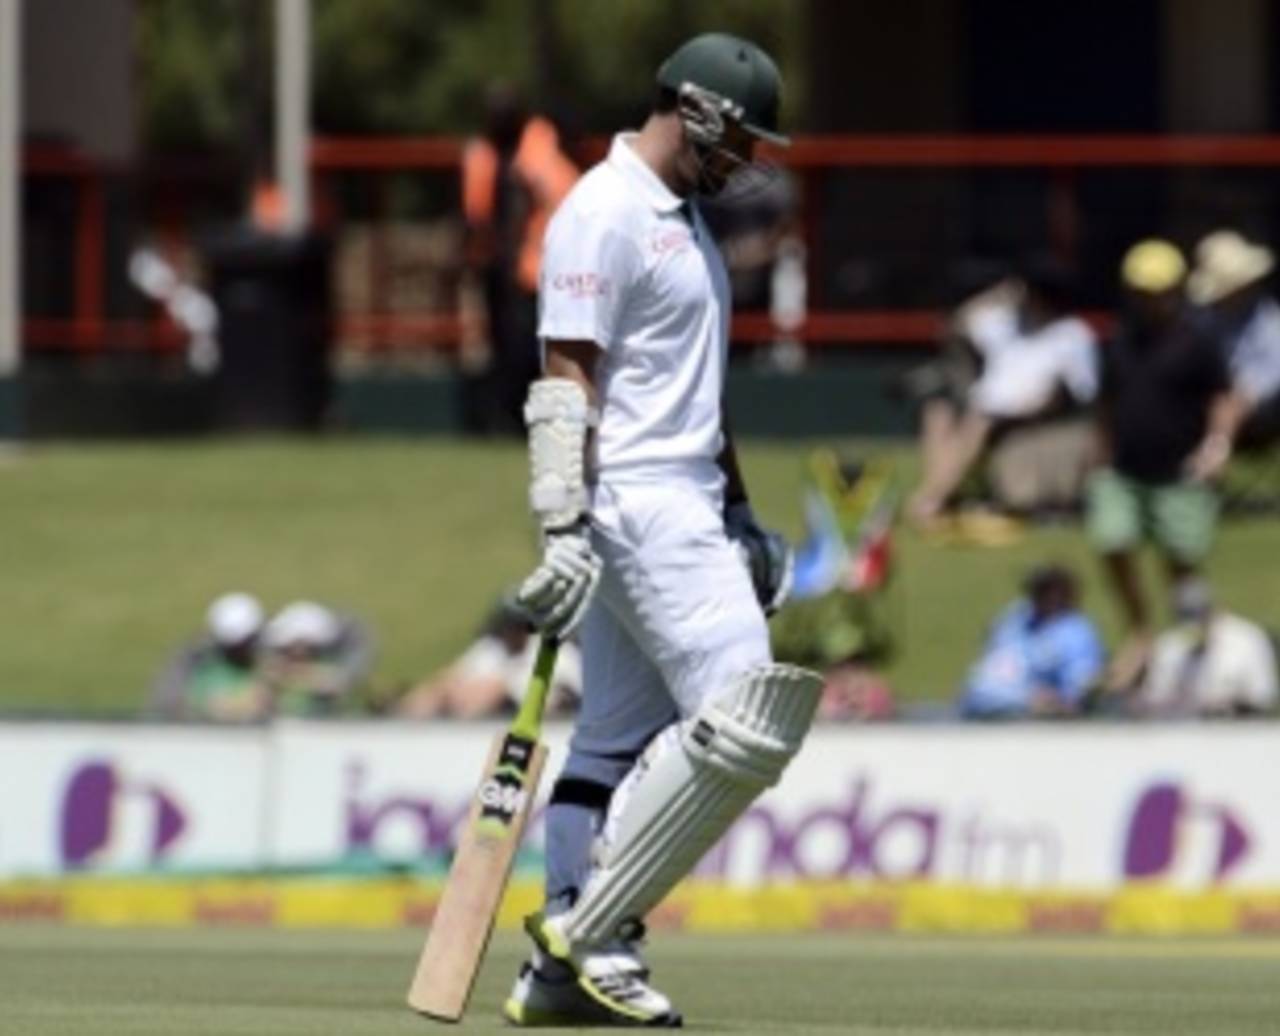 Graeme Smith walks off SuperSport Park, South Africa v Pakistan, 3rd Test, Centurion, 1st day, February 22, 2013